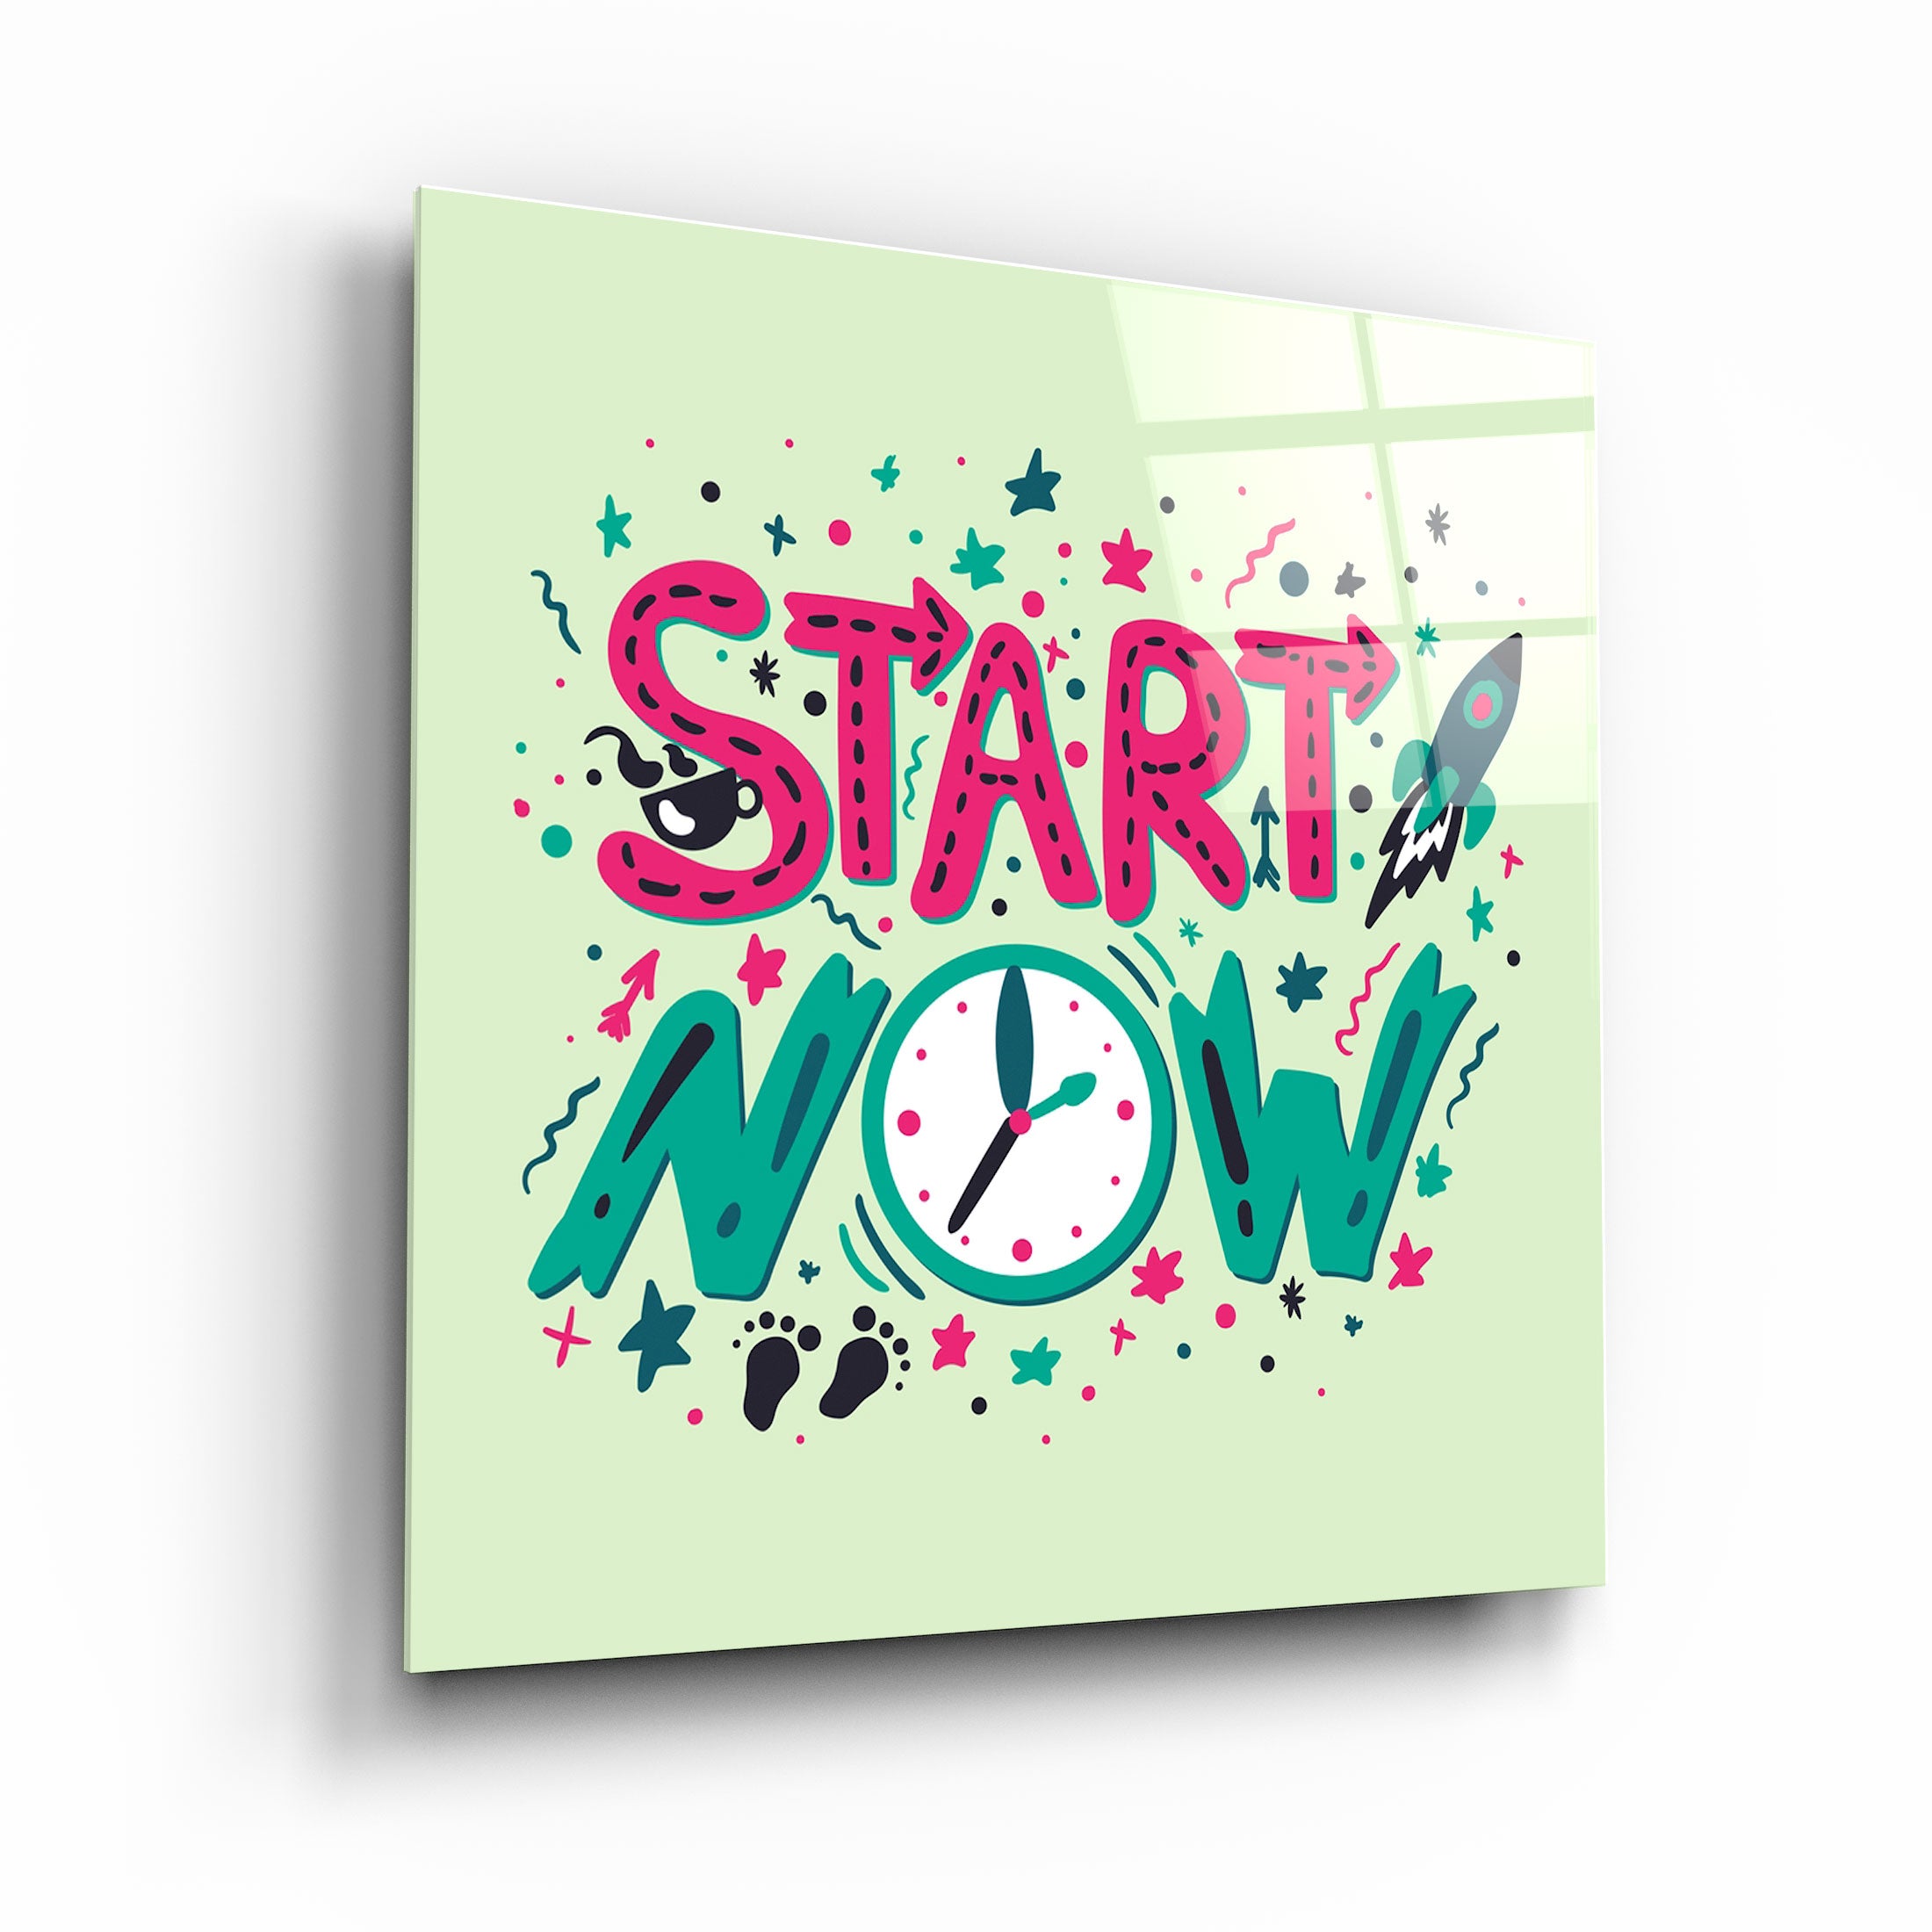 ・"Start Now"・Glass Wall Art | Artdesigna Glass Printing Wall Arts.